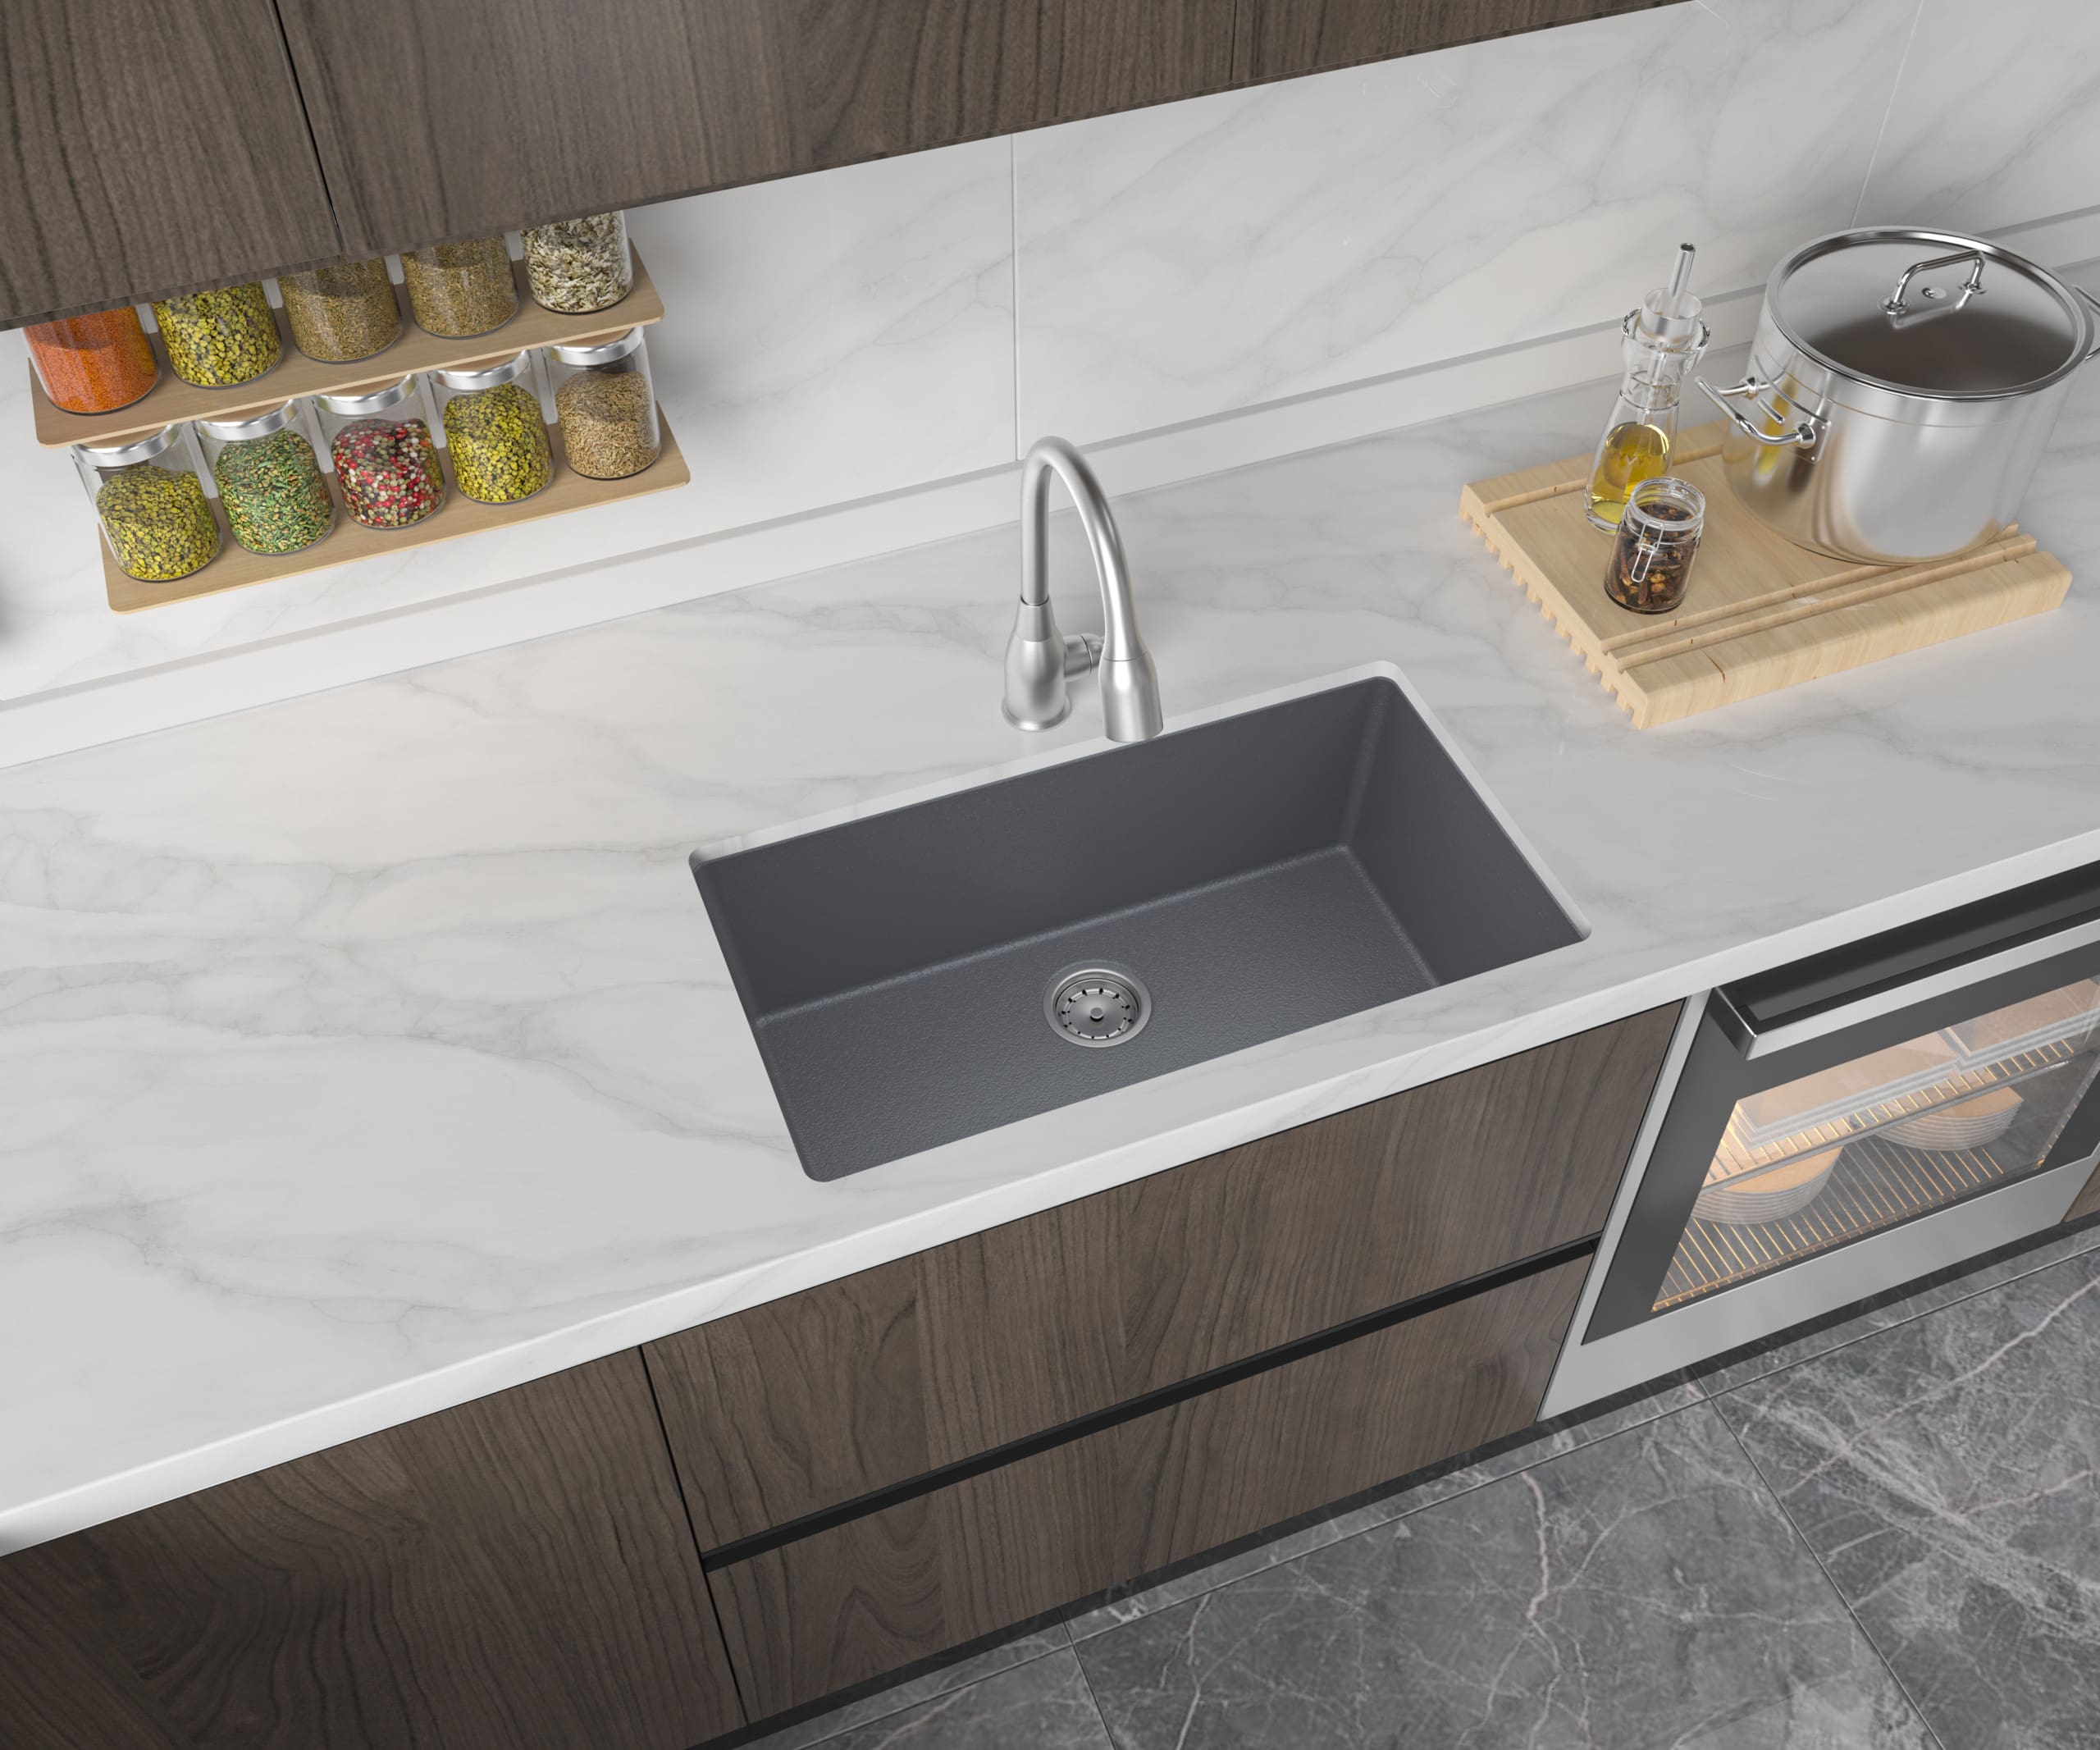 installing new kitchen sink in granite countertop